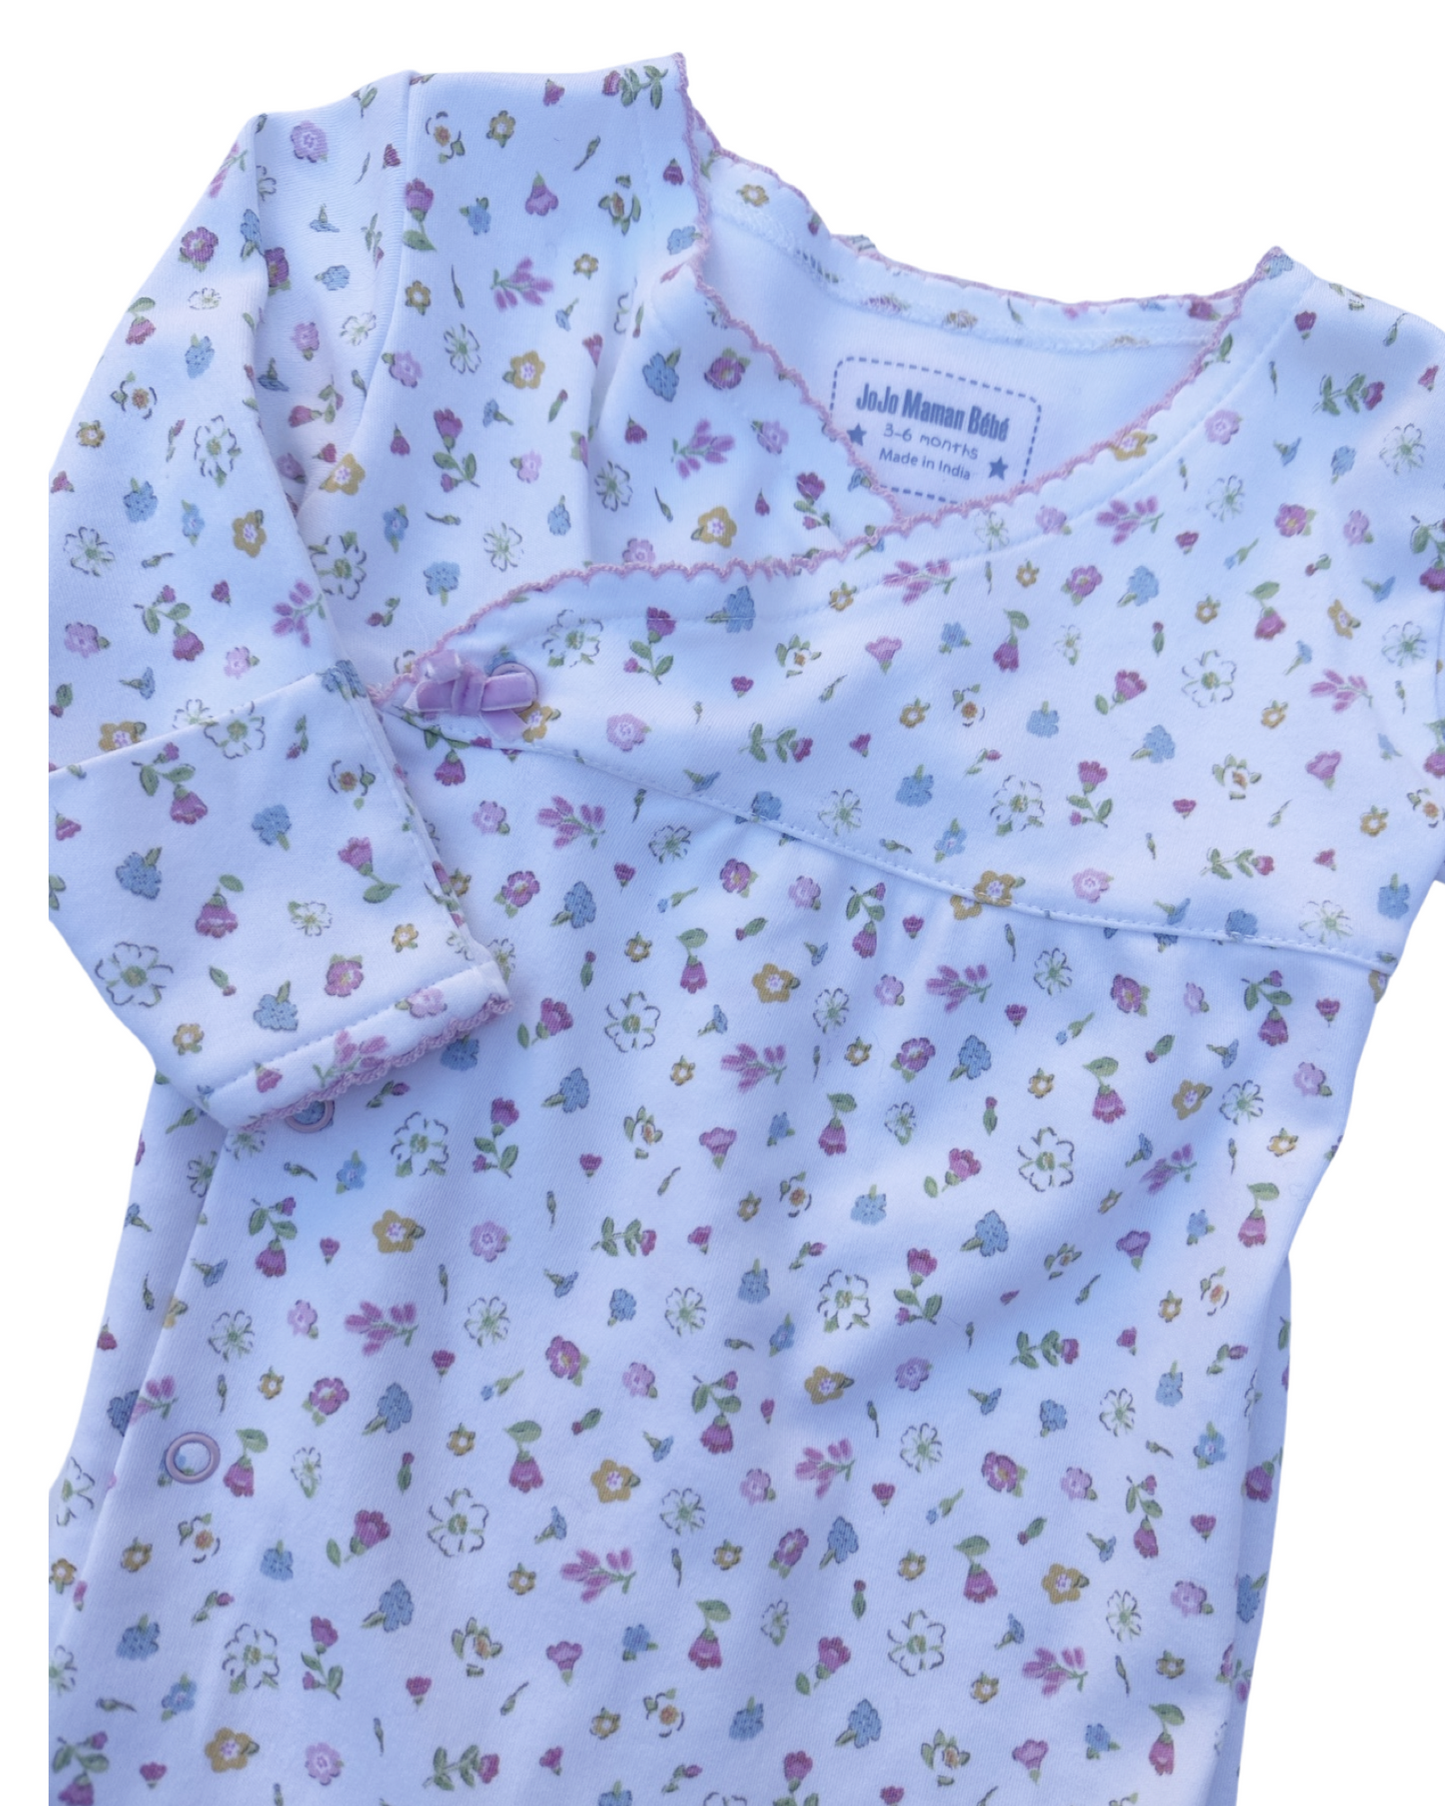 JoJo Maman Bebe floral print sleepsuit (size 3-6mths)